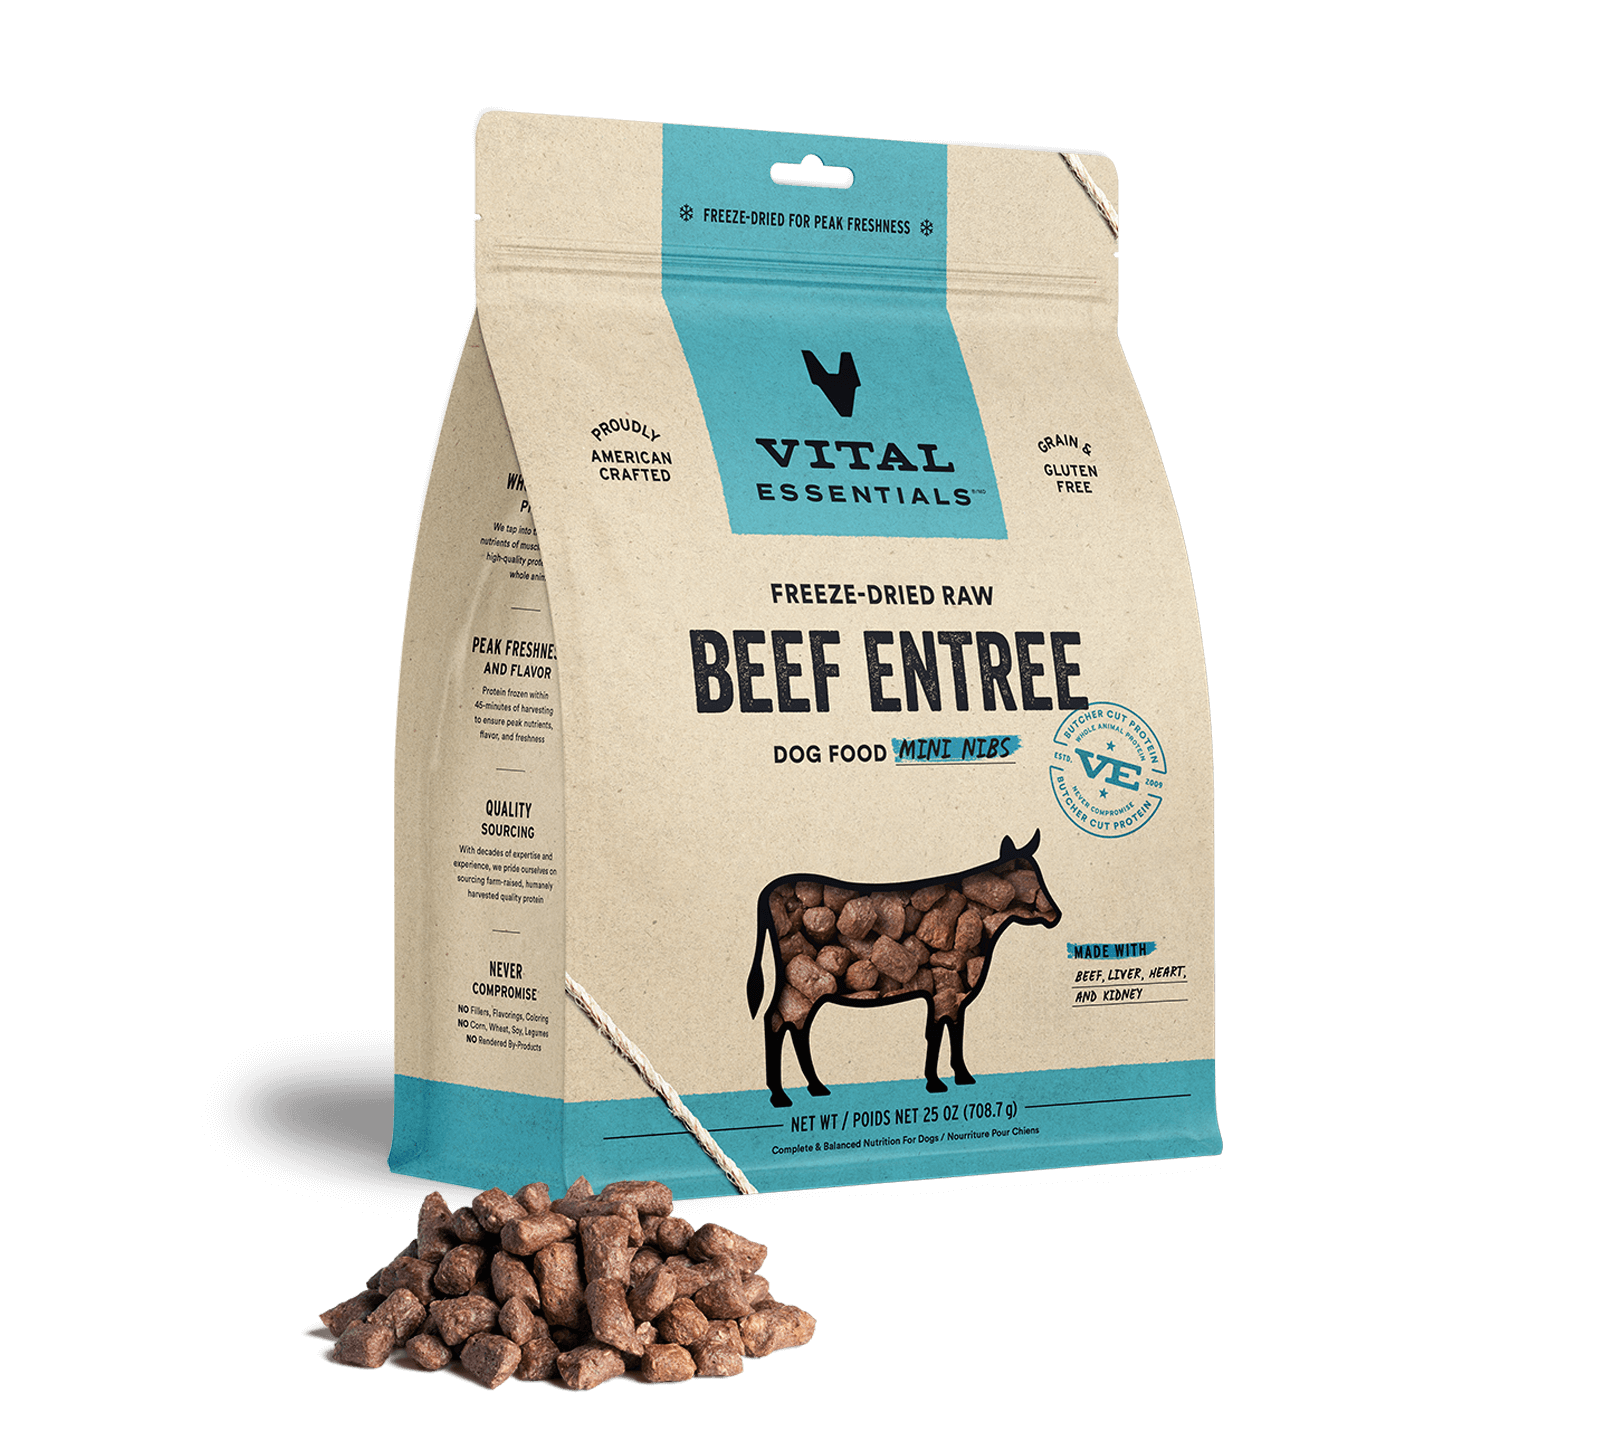 Vital Essentials Freeze-Dried Raw Beef Entree Dog Food Mini Nibs, 25 oz - Health/First Aid